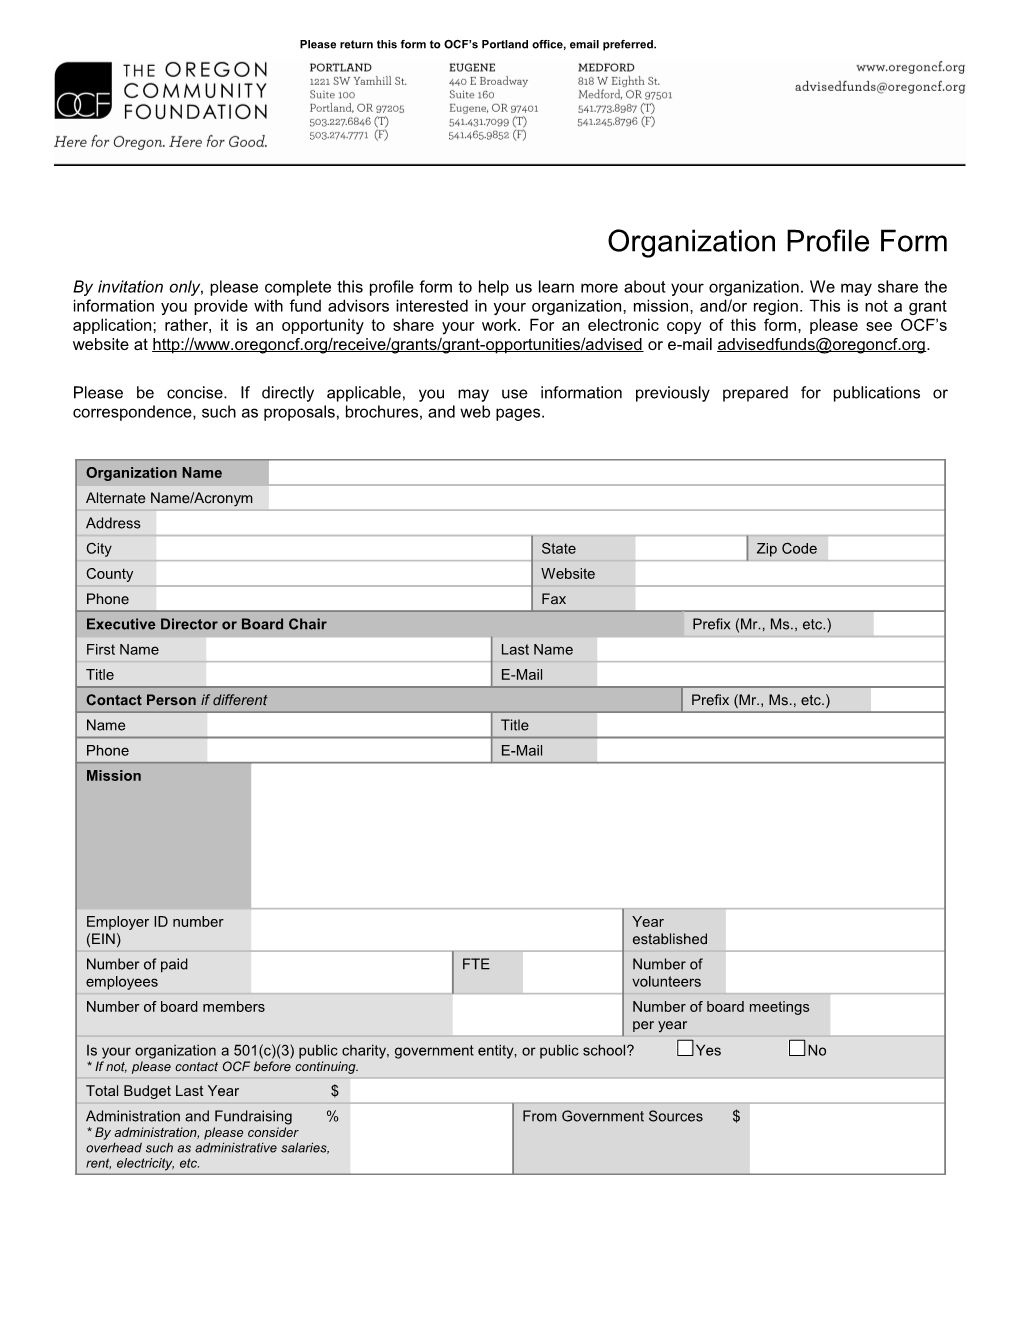 The Oregon Community Foundation Organization Profile Form Page 2 of 2